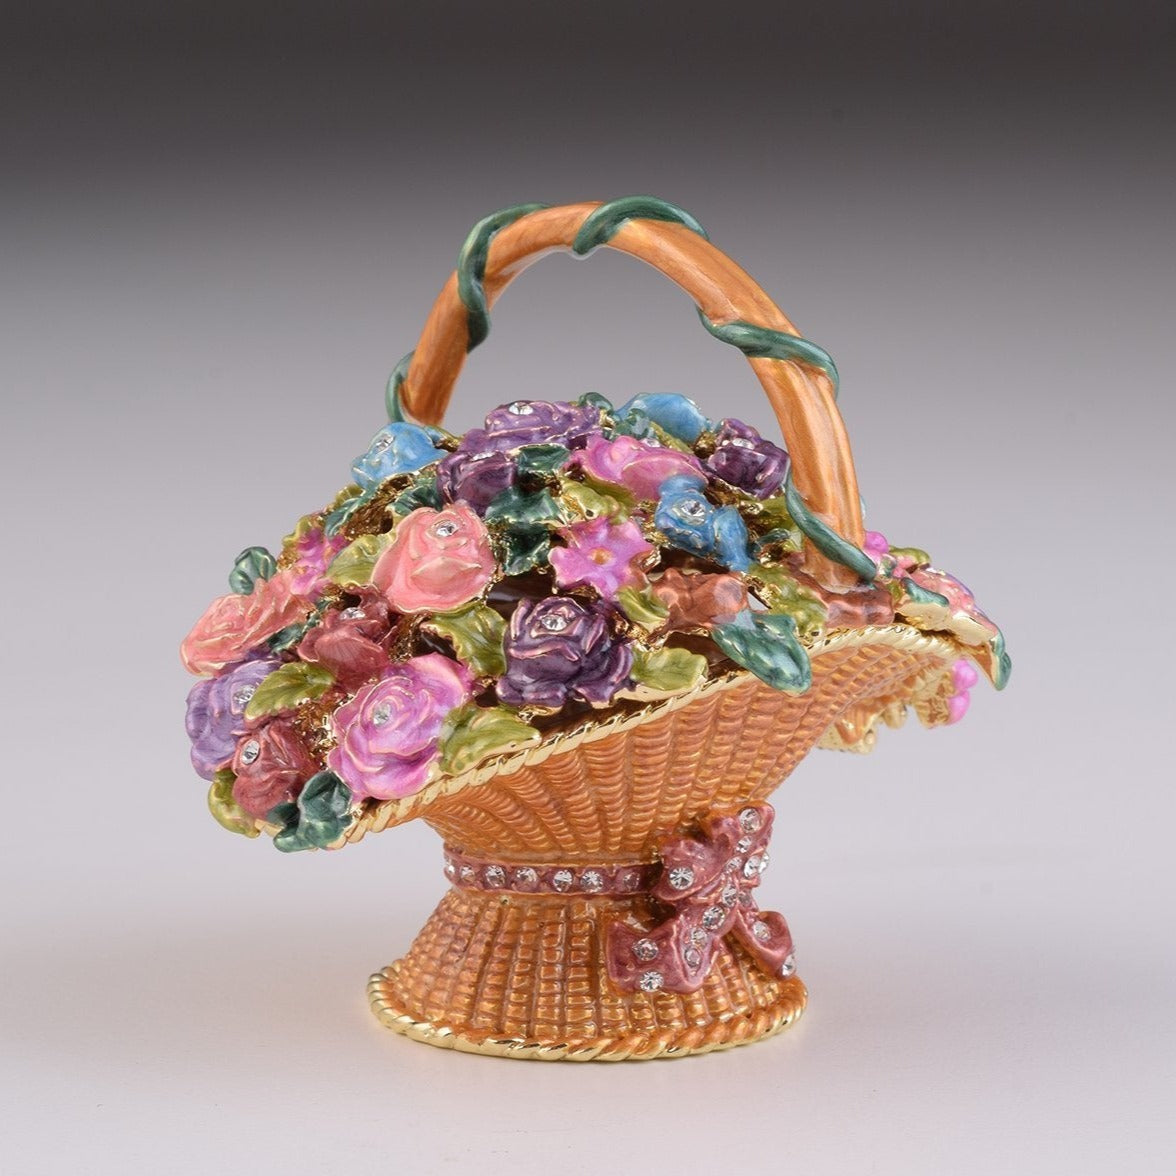 Keren Kopal Colorful Vase Trinket Box  66.50